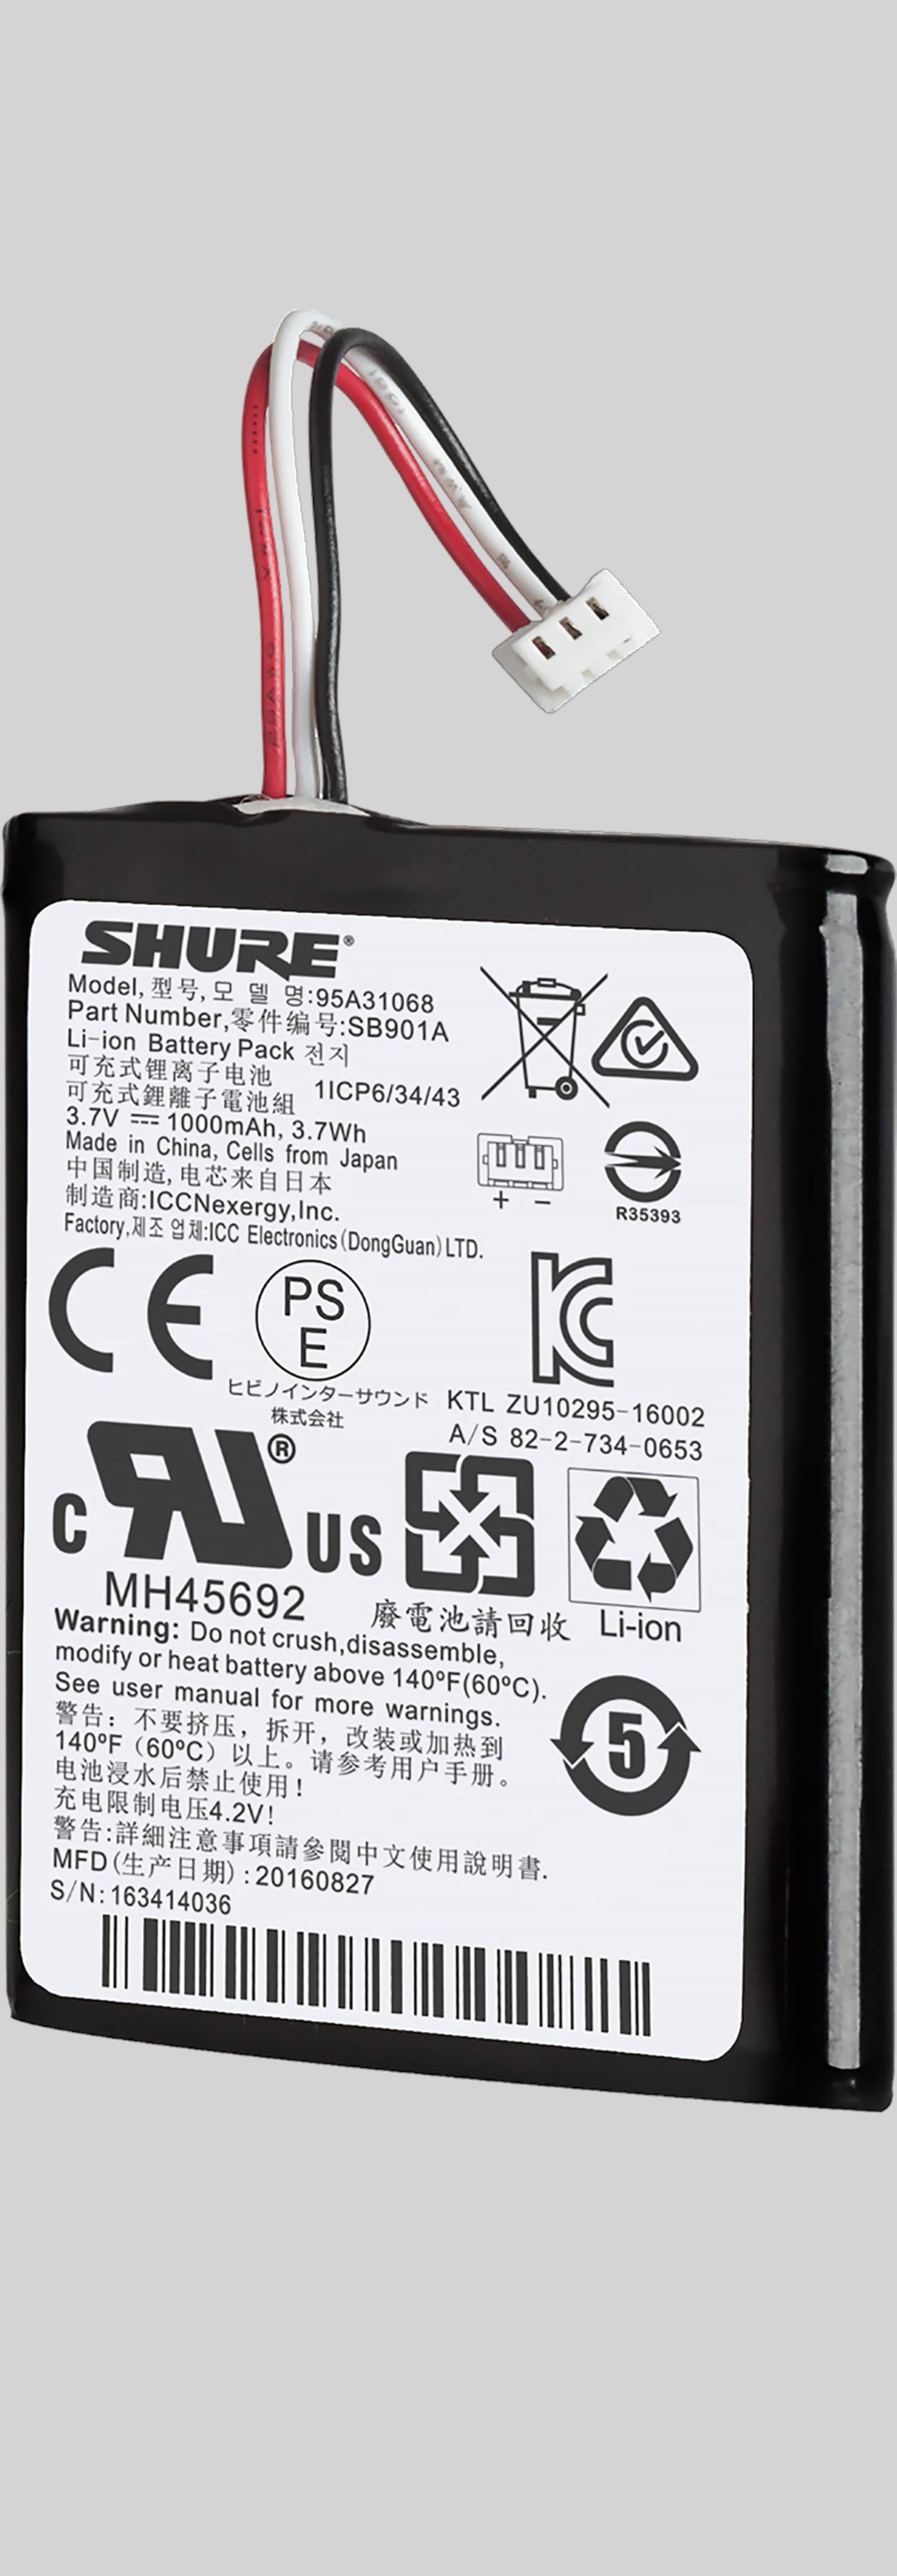 Shure (OEM) A90 LTD